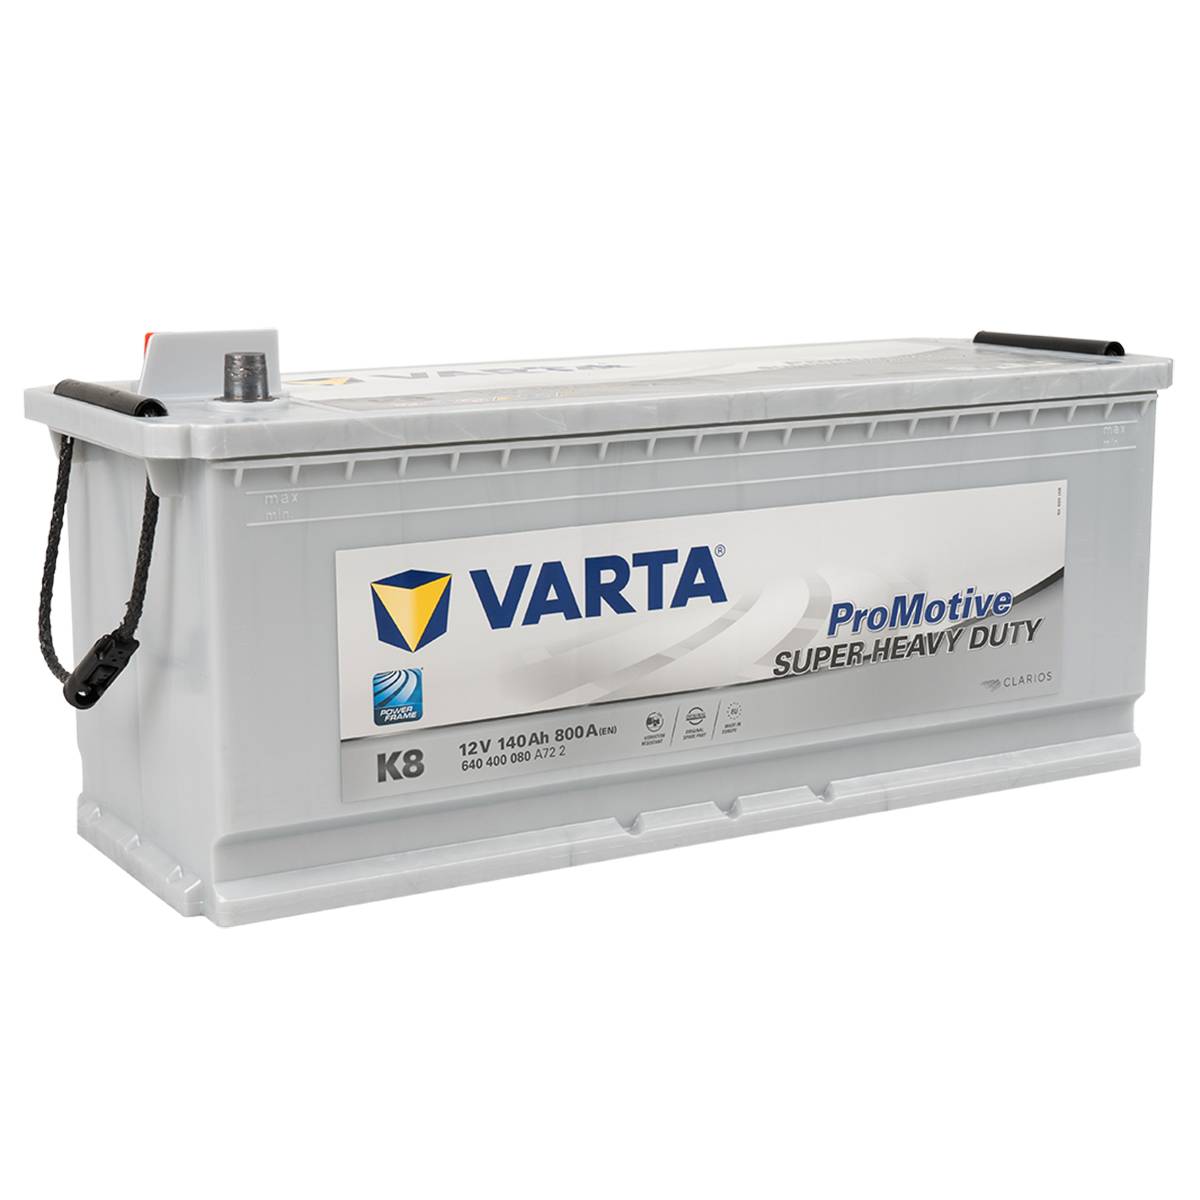 VARTA K8 ProMotive Super Heavy Duty 12V 140Ah 800A LKW Batterie 640 400 080, Starterbatterie, Caravan, Batterien für